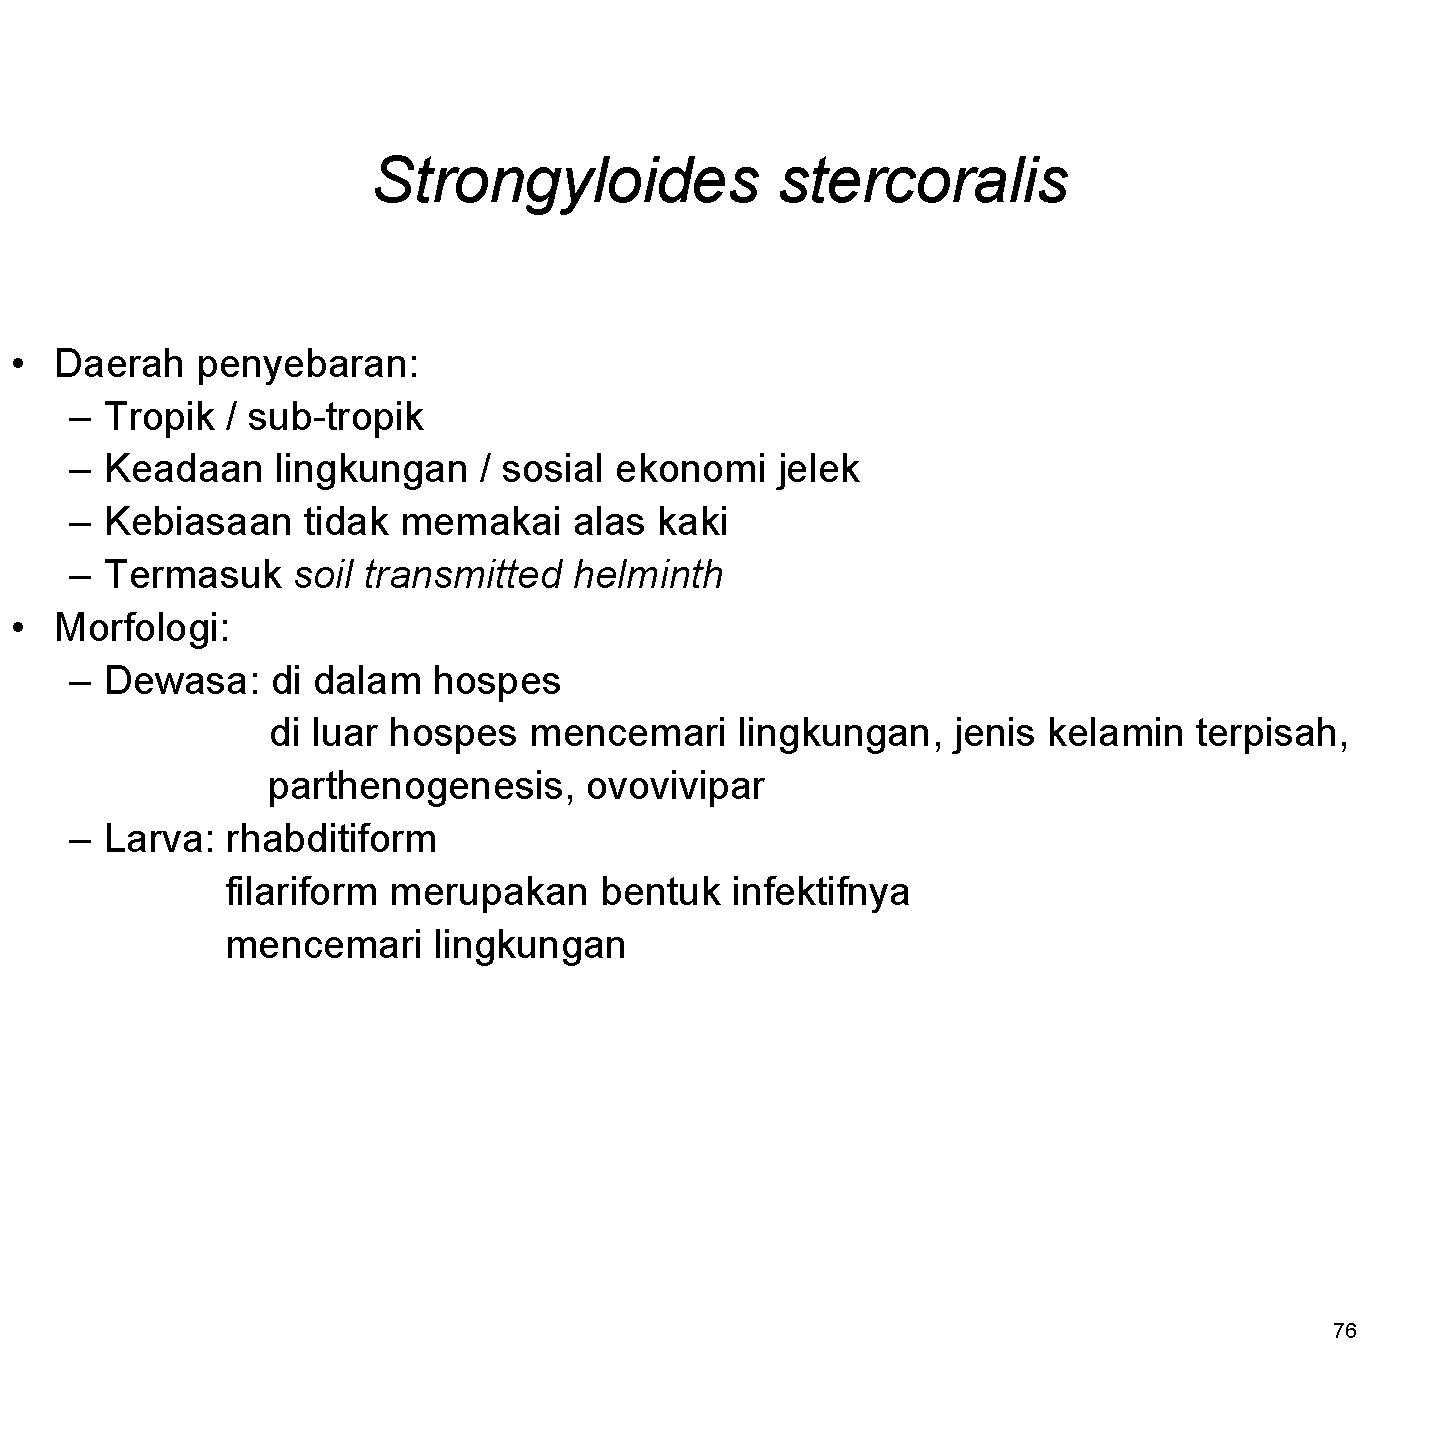 Strongyloides stercoralis • Daerah penyebaran: – Tropik / sub-tropik – Keadaan lingkungan / sosial